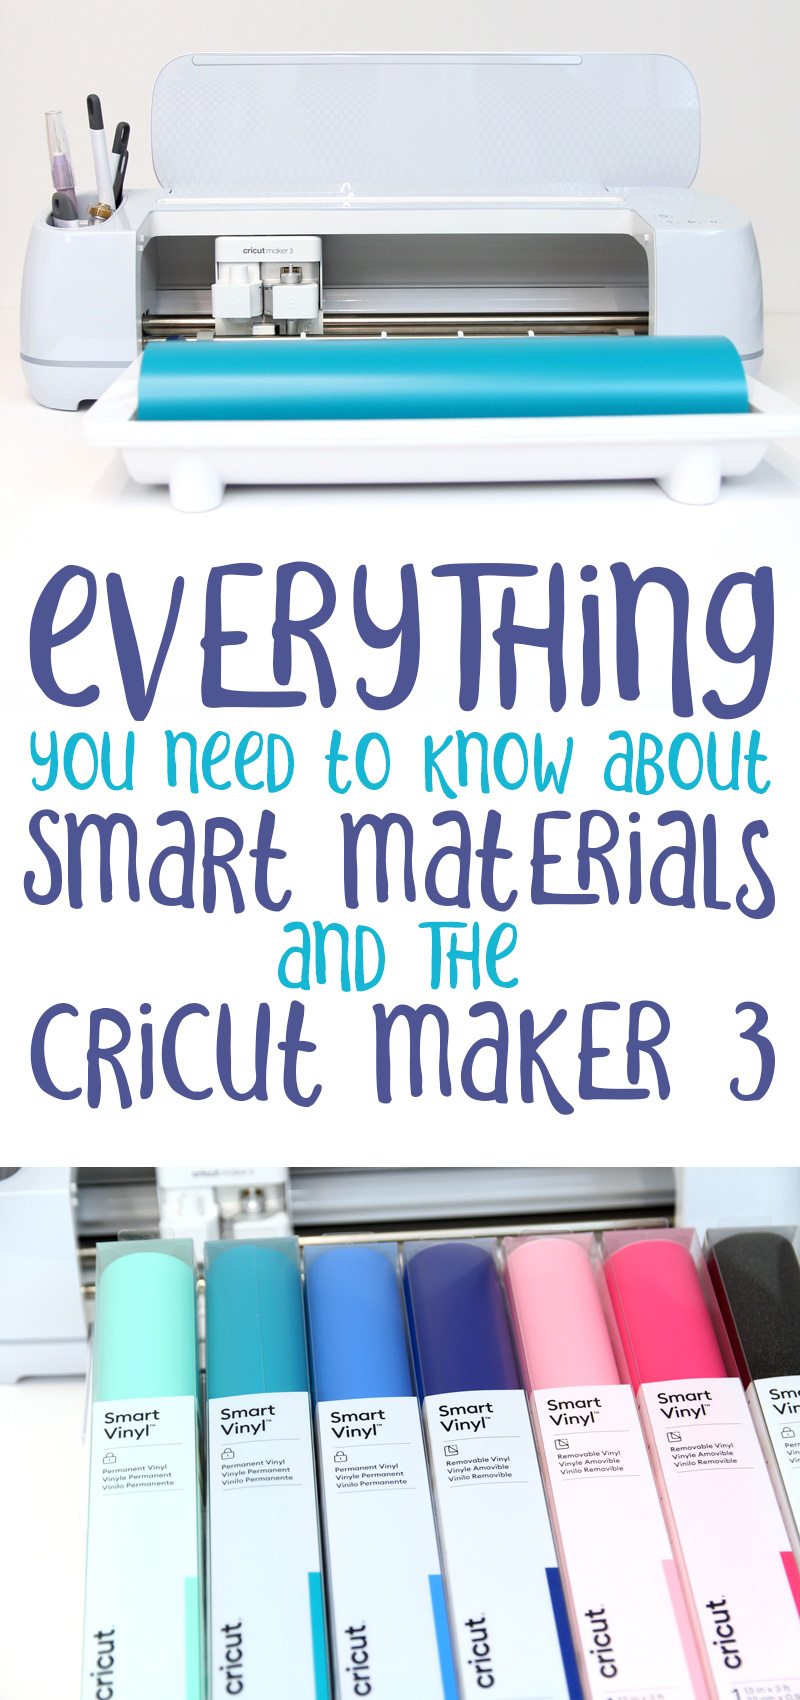 Cricut Maker 3 New Machine Review